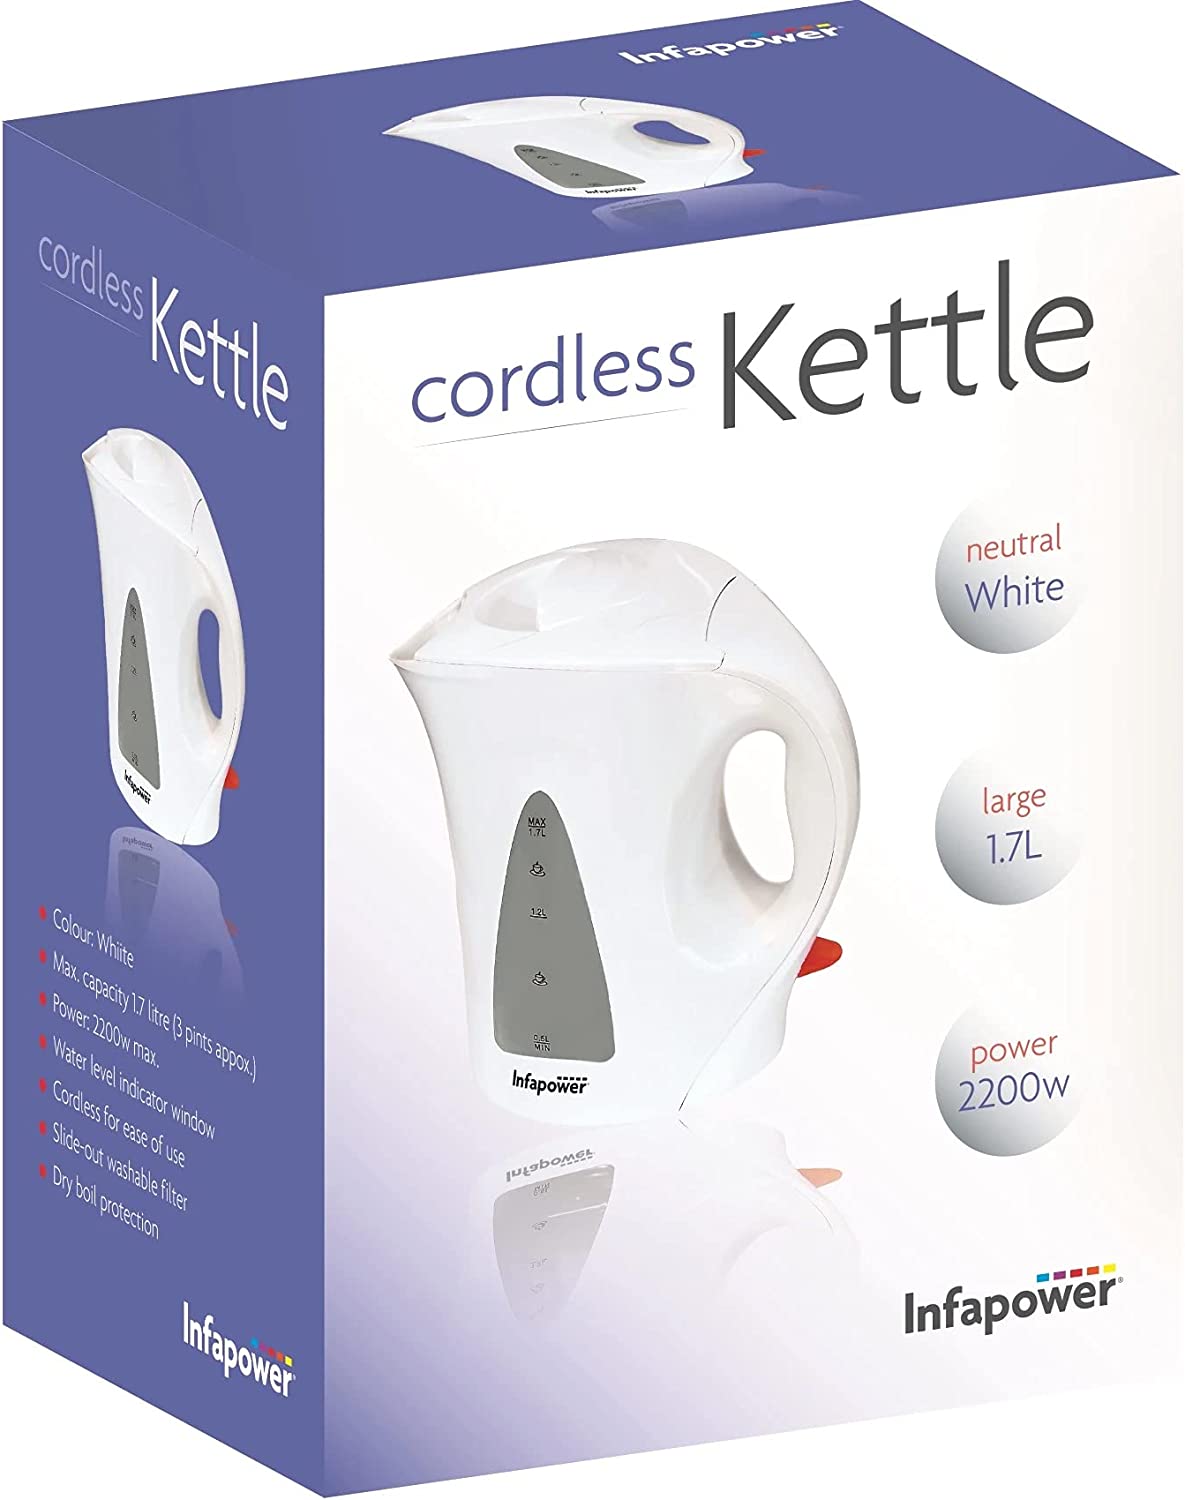 Cordless Electric White Kettle Infapower 2200w 1.7L (X501)